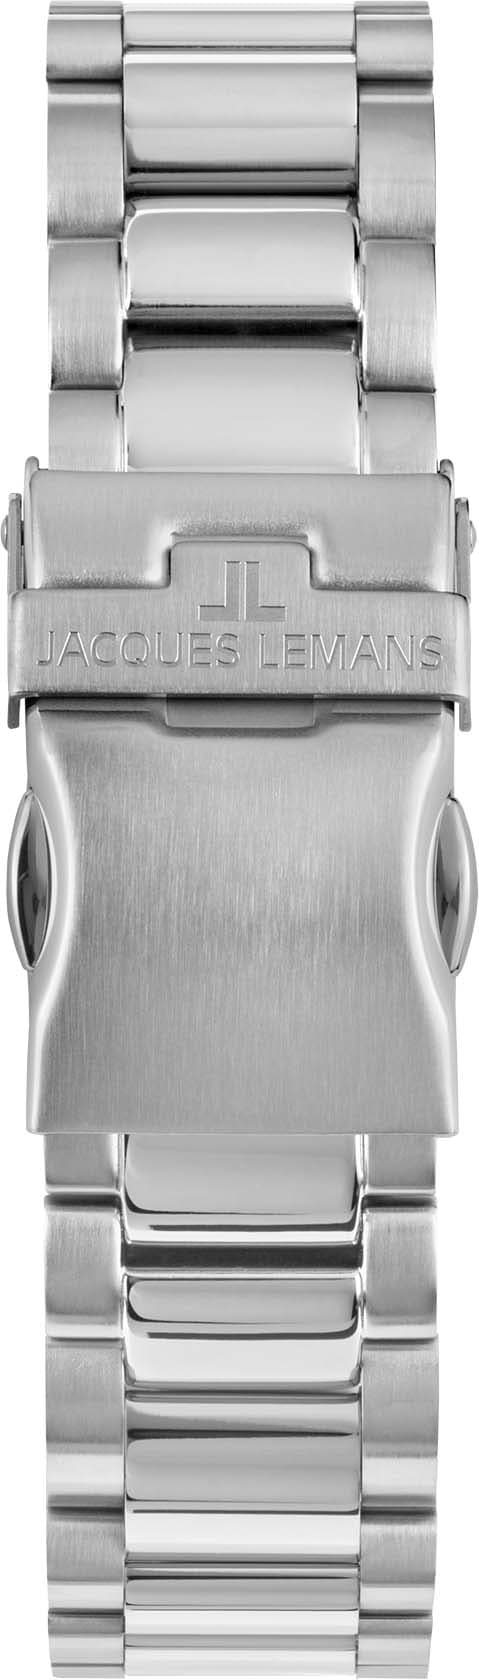 Jacques Lemans Chronograph »Liverpool, 1-2140F« online kaufen | I'm walking